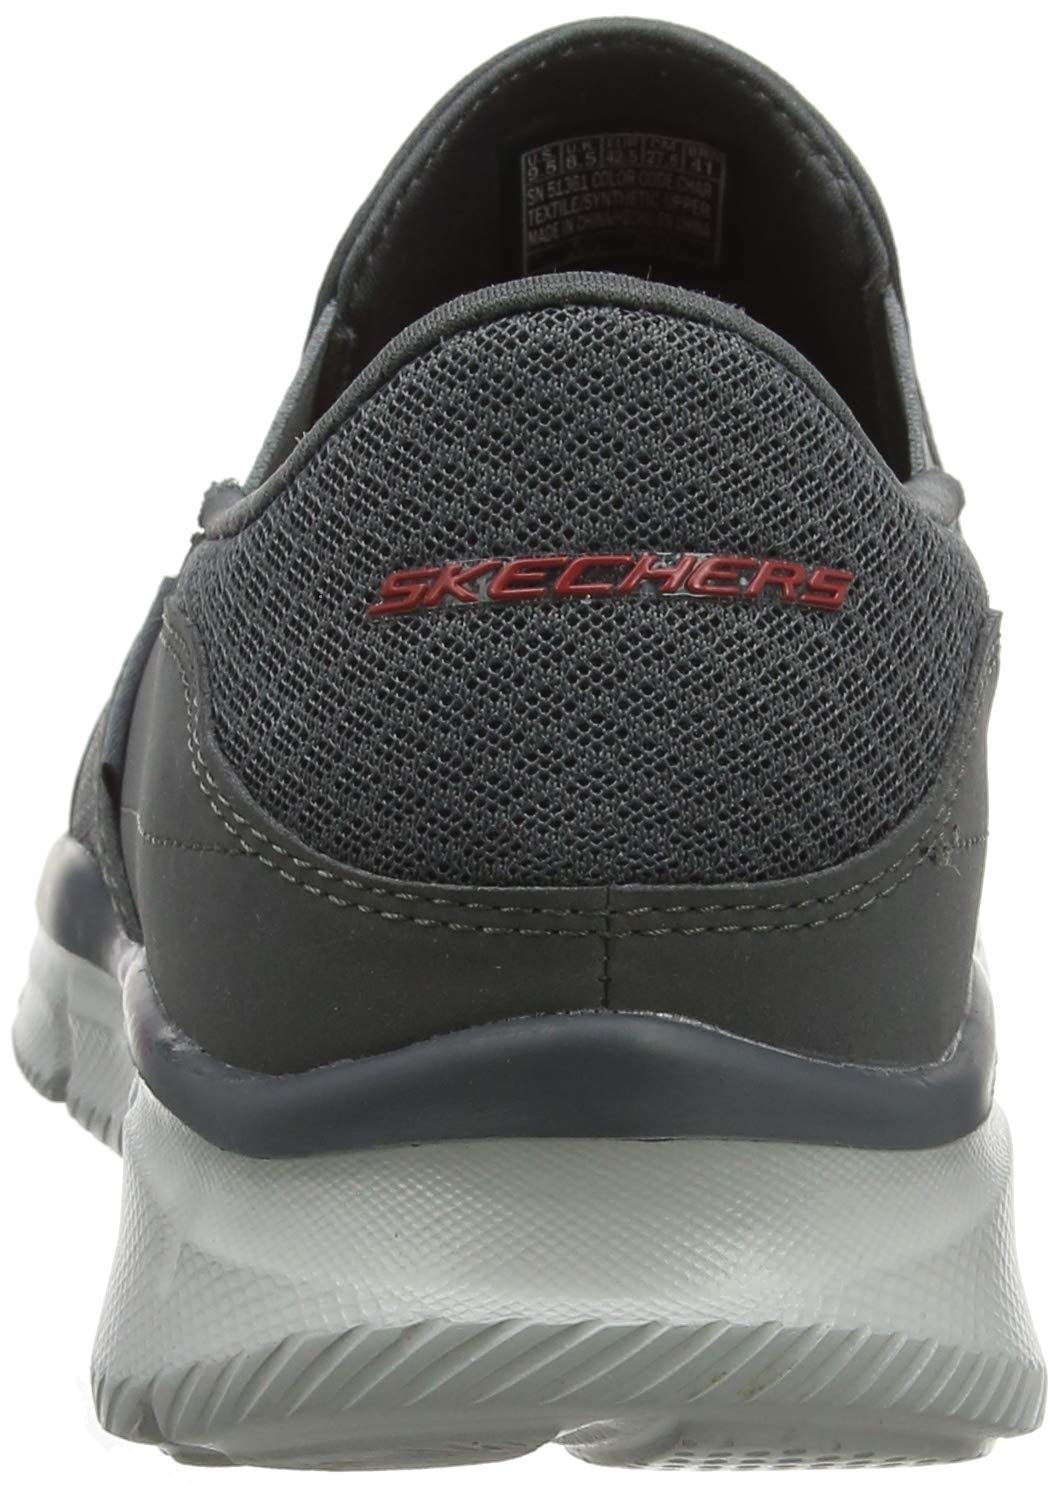 Skechers Men's Equalizer Persistent Slip-On Sneaker